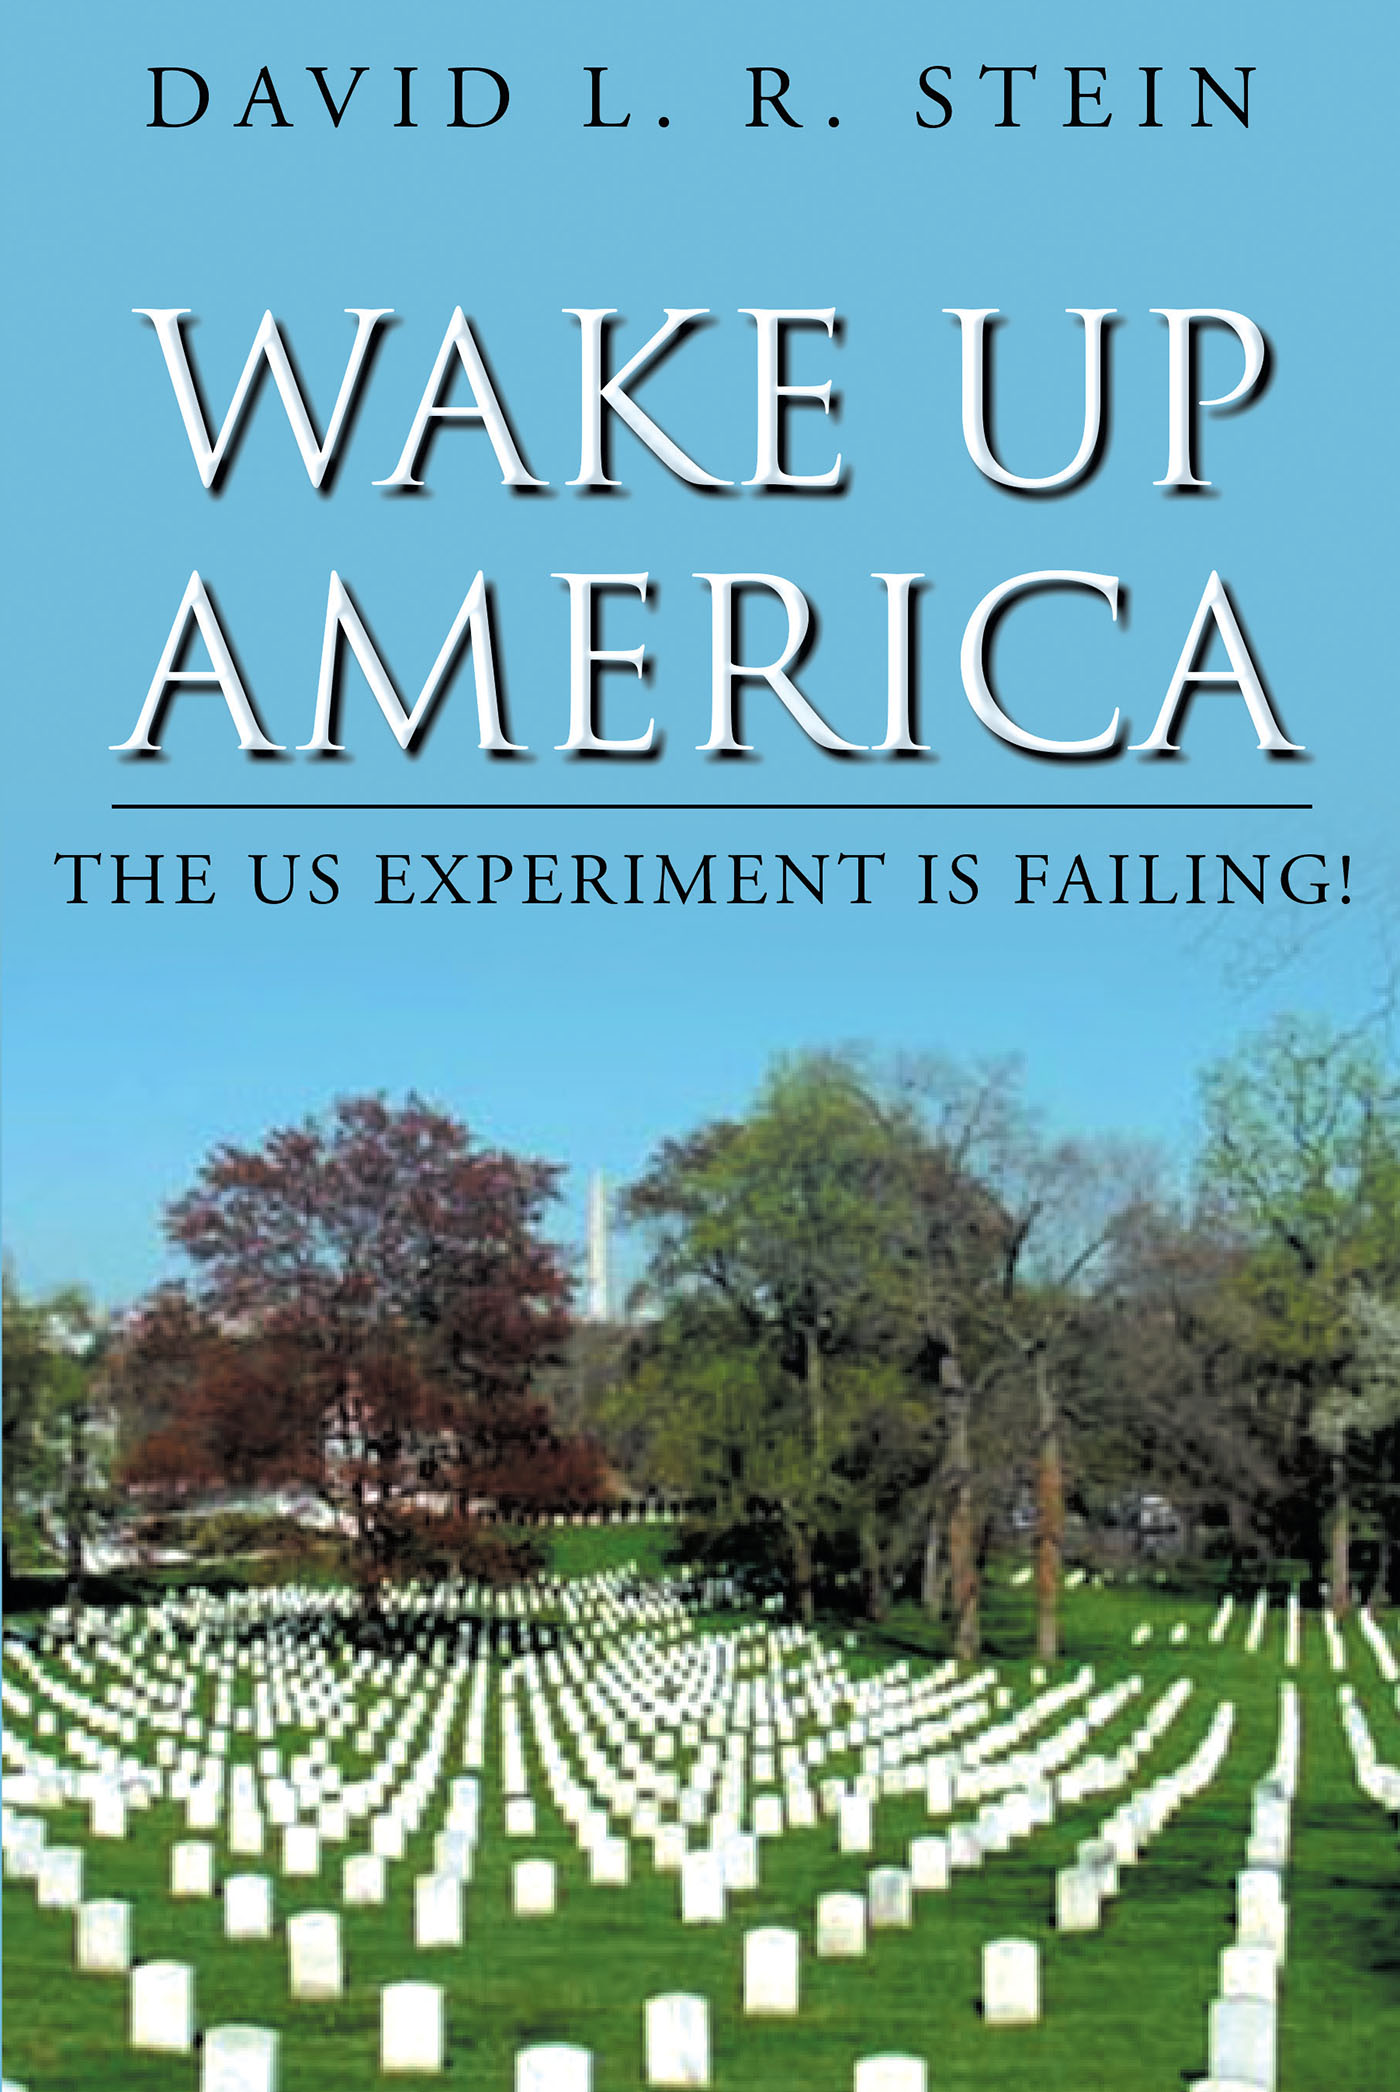 Wake Up America Cover Image